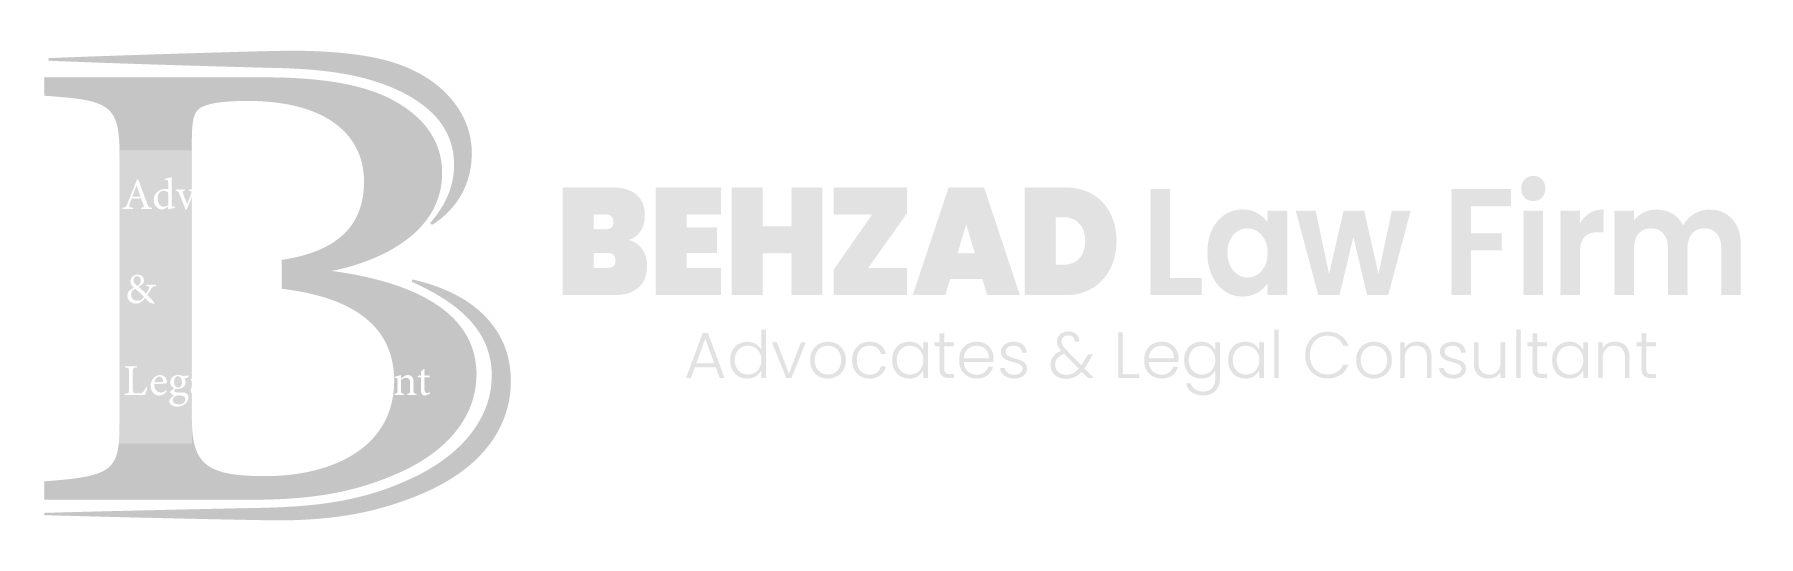 Behzad Law Firm